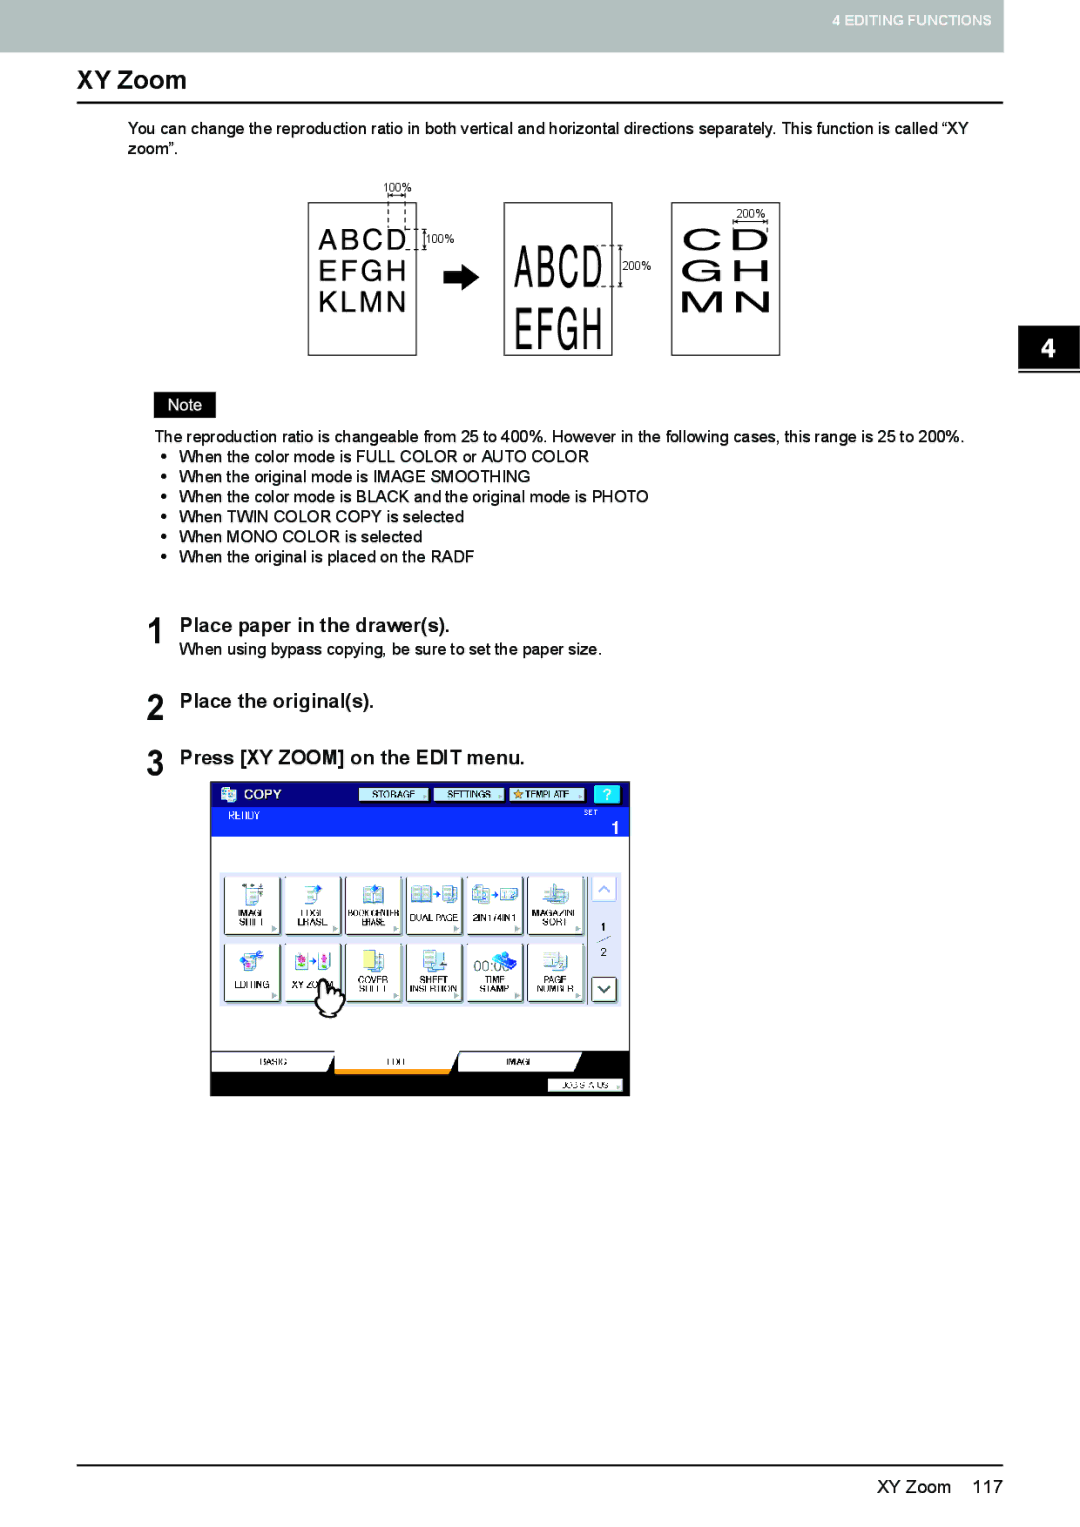 Toshiba e-STUDIO5520C, 6520c manual Place the originals Press XY Zoom on the Edit menu 